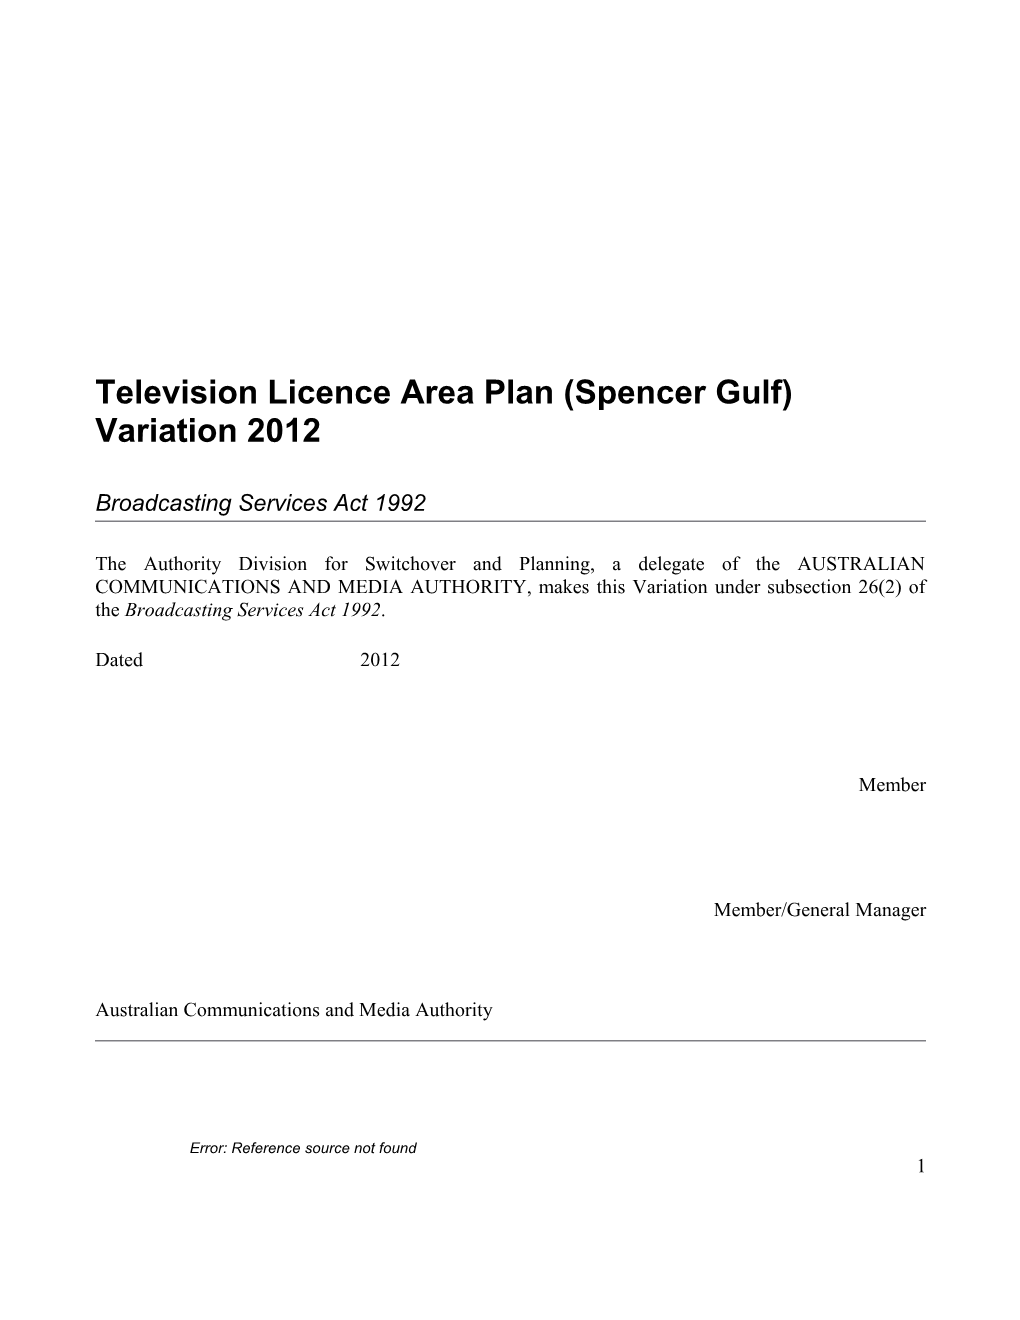 Television Licence Area Plan (Spencer Gulf) Variation 2012